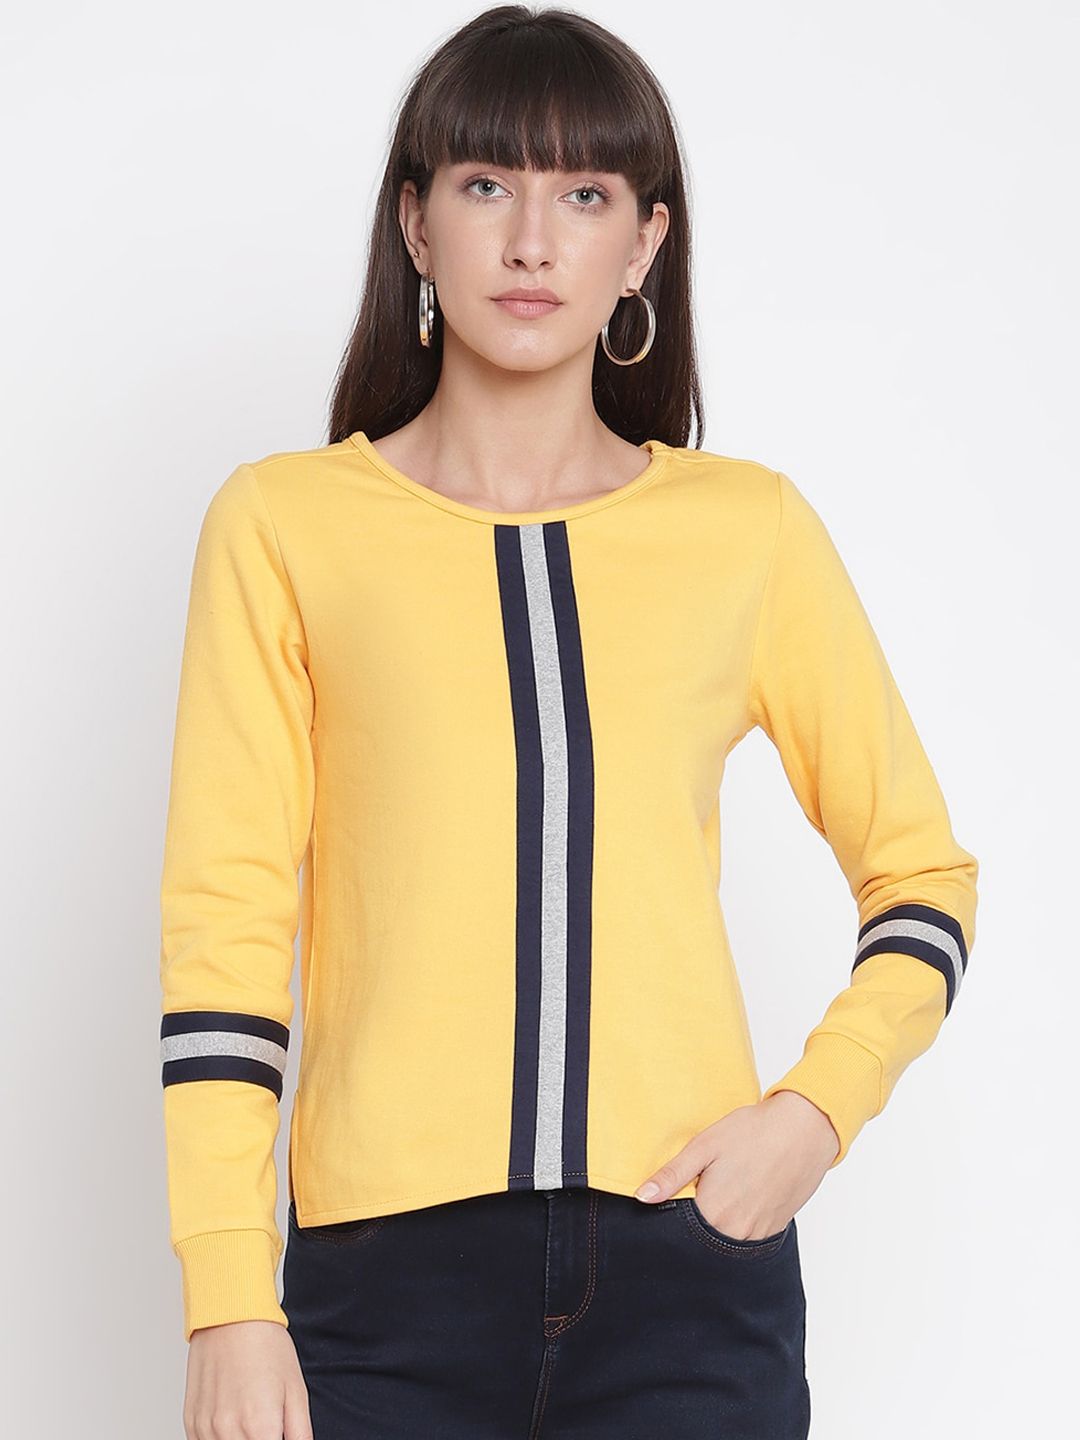 The Vanca Women Yellow Sweatshirt Price in India